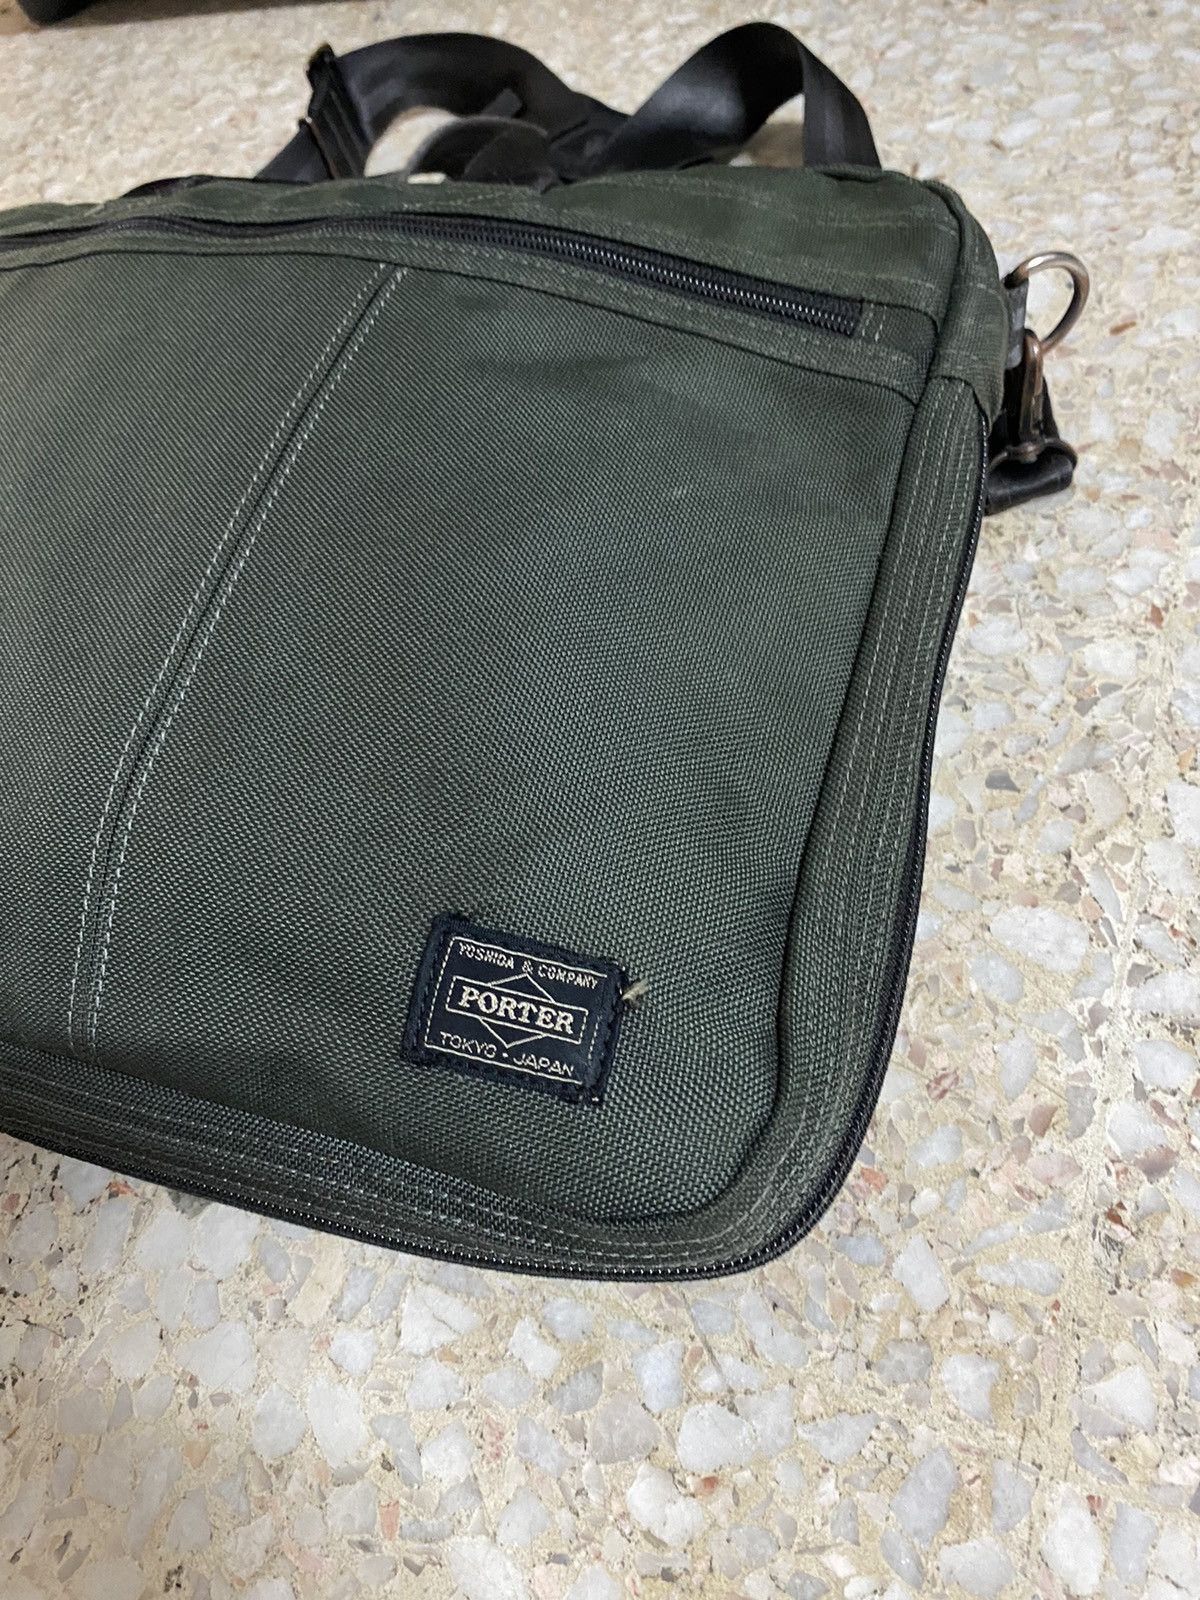 Porter Cordura Messenger Bag Green Army Made in Japan - 6